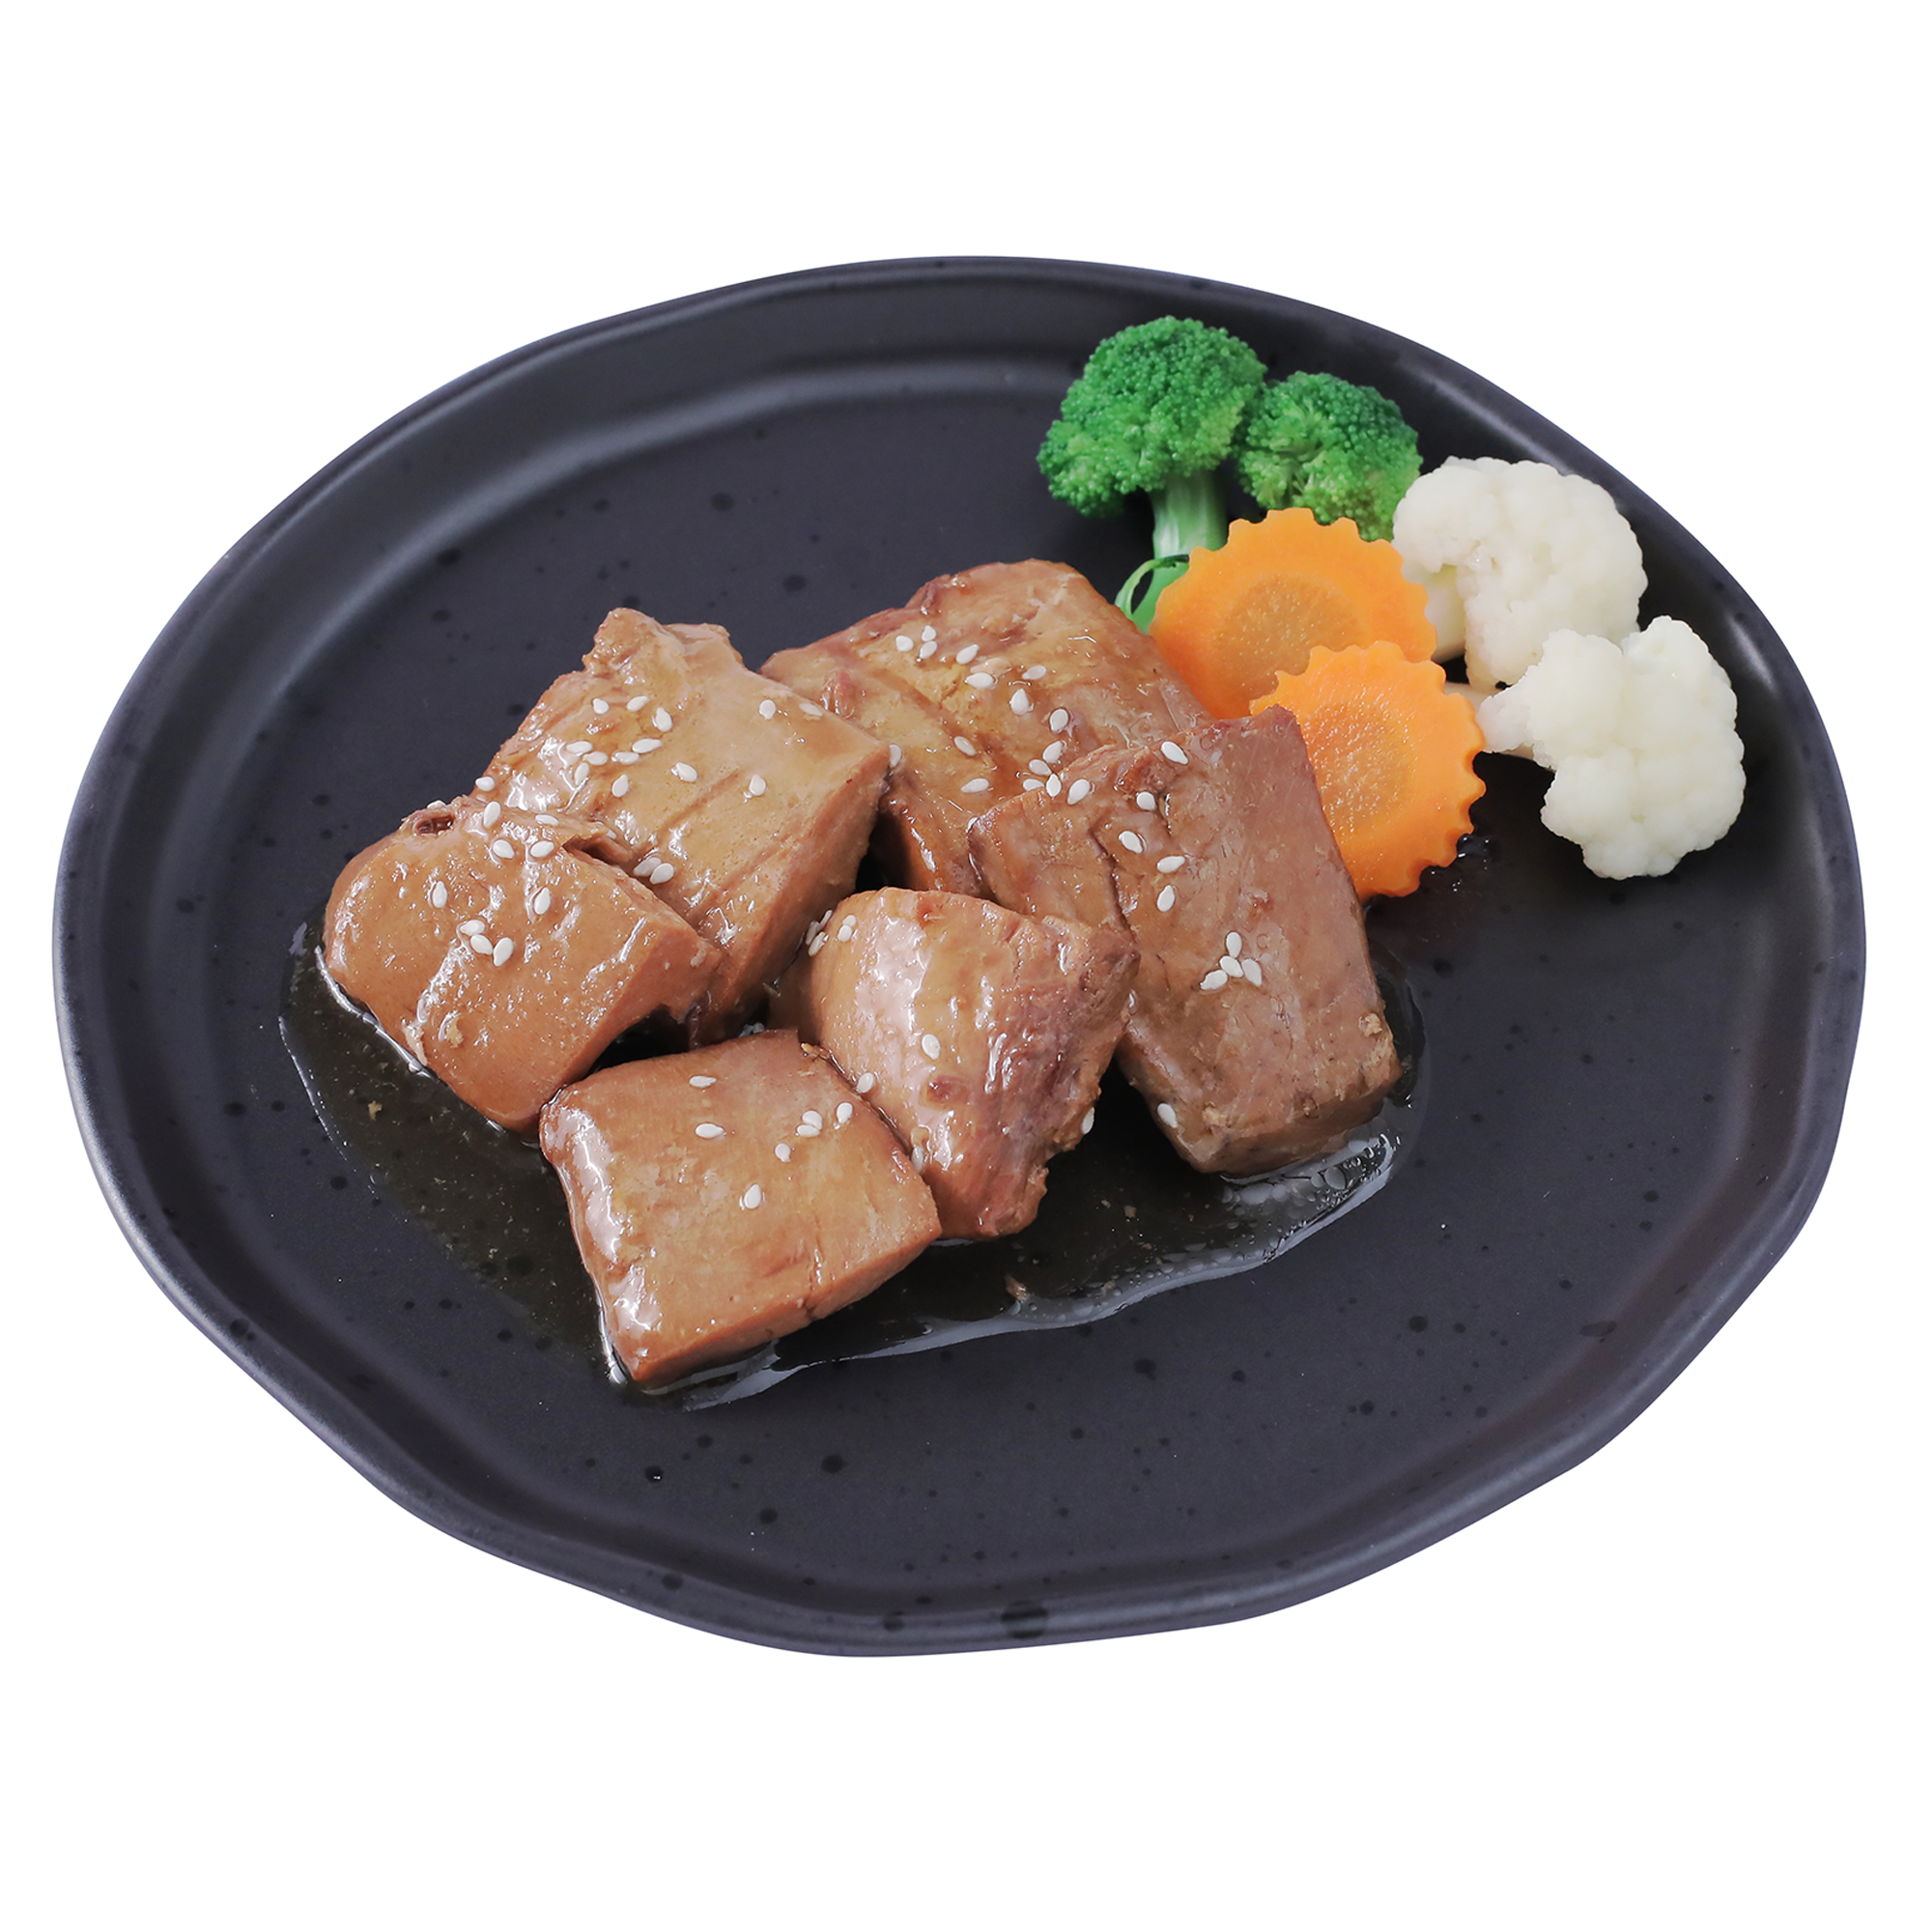 ShanYi Instant Microwave Meals Ready to Eat, 300g/10.6oz,Teriyaki Tuna Steak, Case of 6